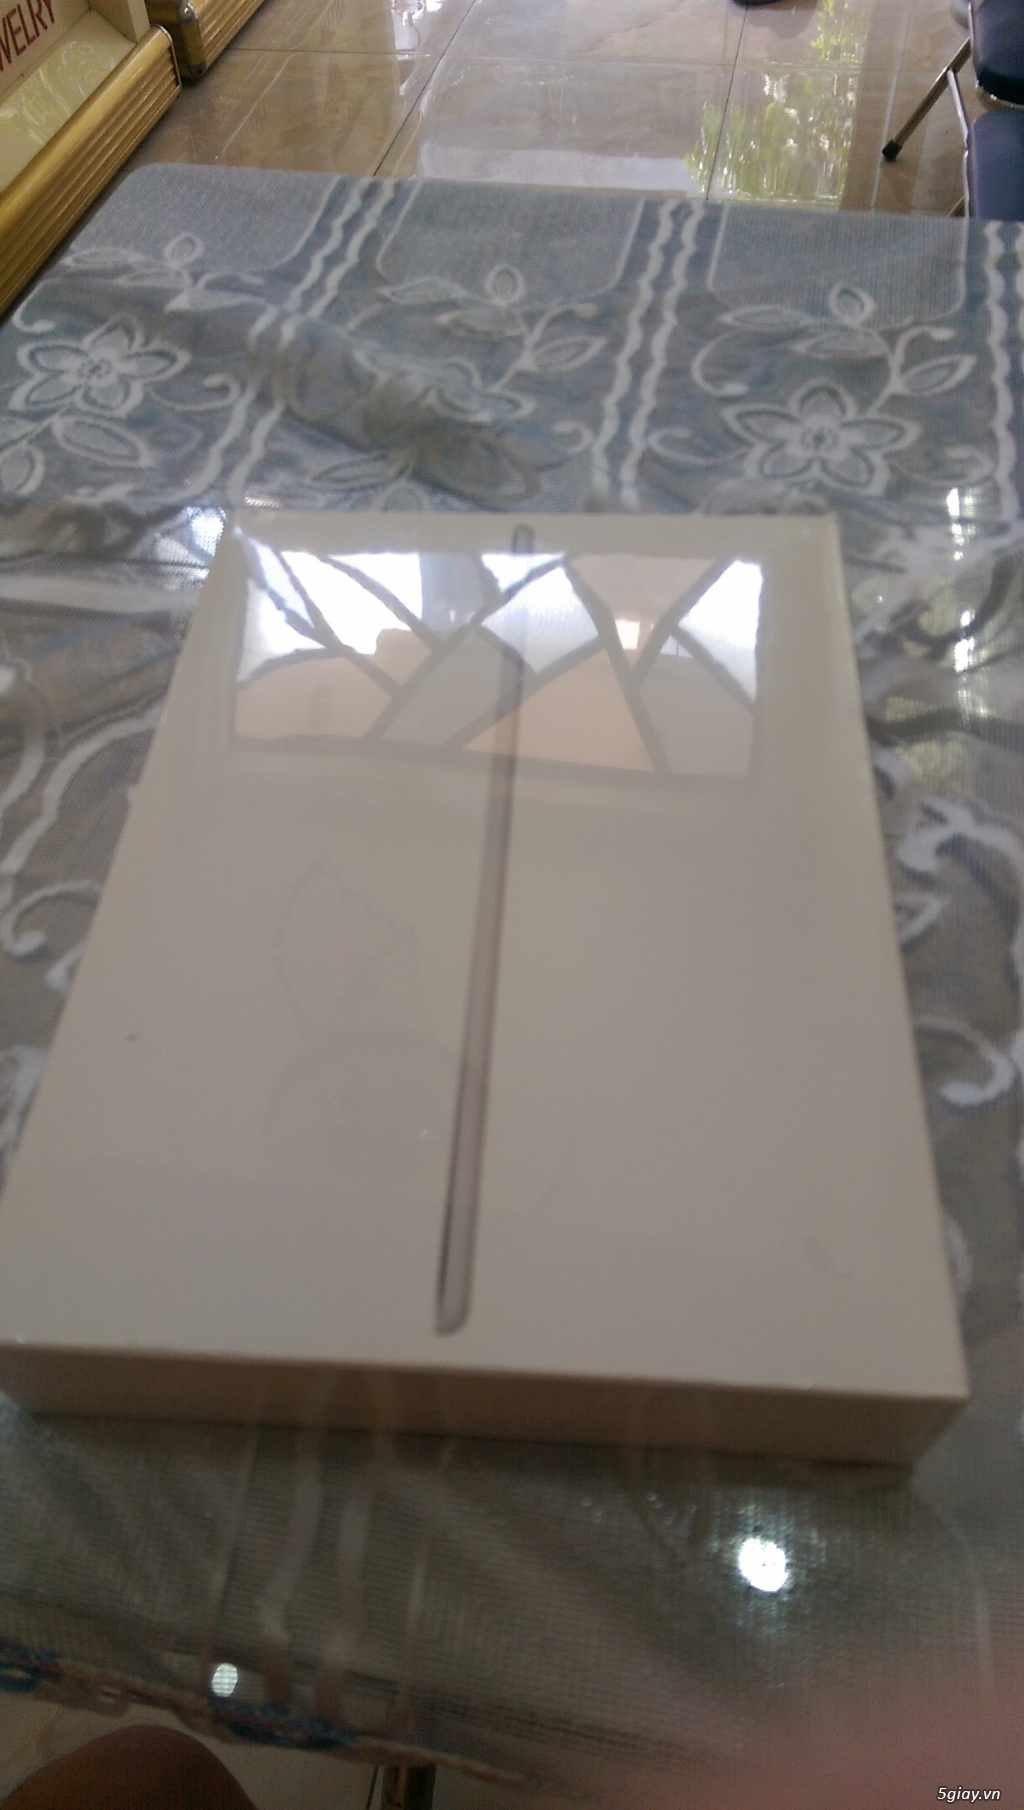 Ipad Air 2 Wifi 64GB Silver Full box nguyên seal chưa active.